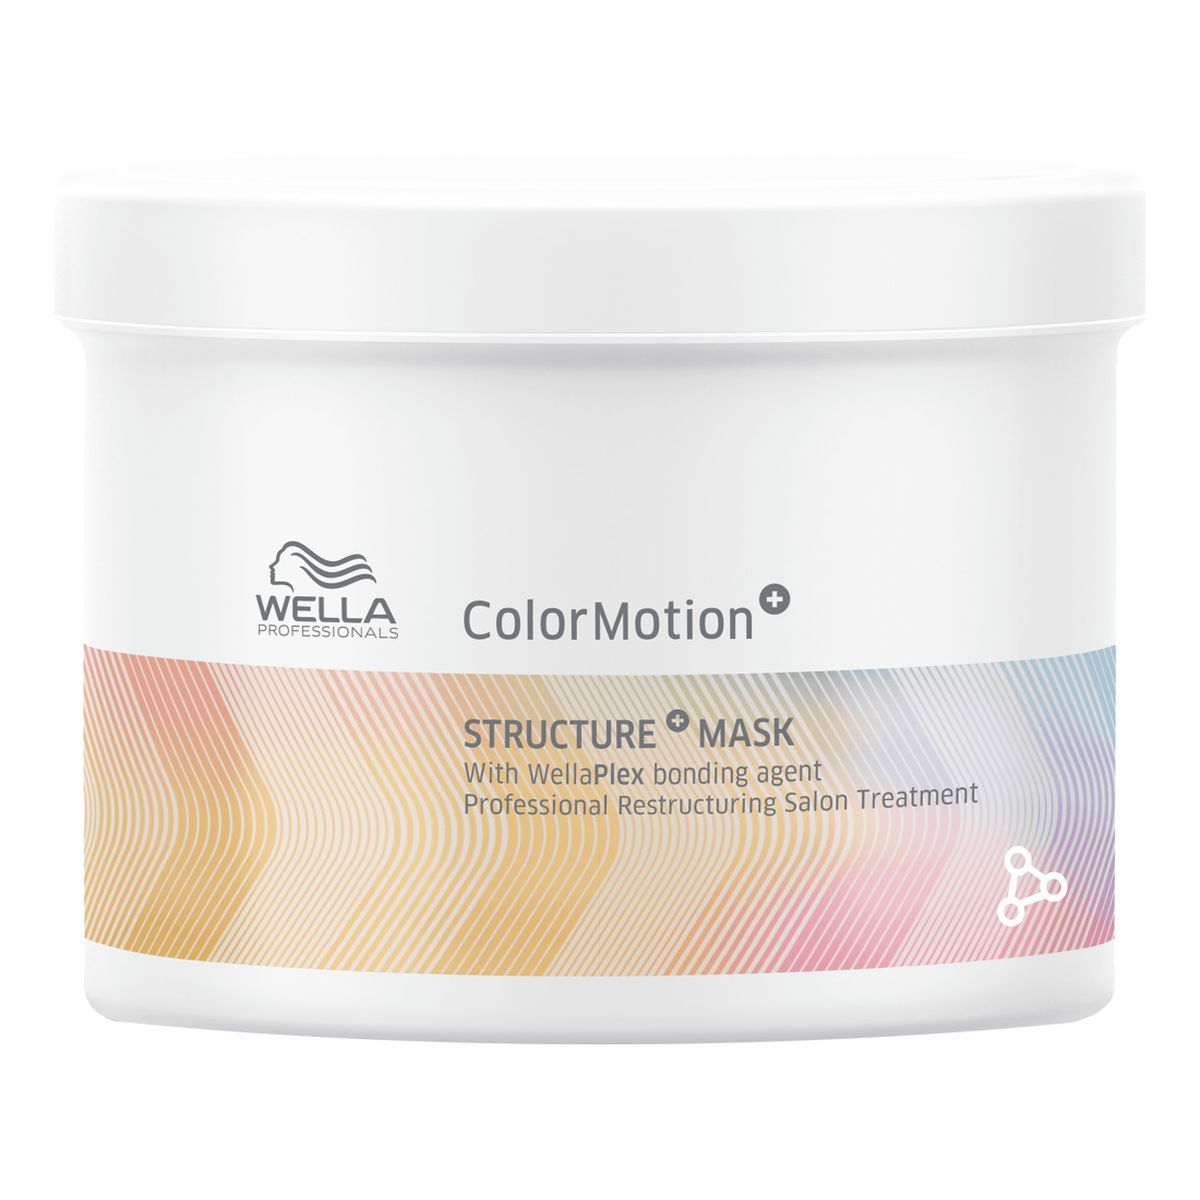 Wella Professionals Colormotion+ structure+ mask maska chroniąca kolor włosów 500ml